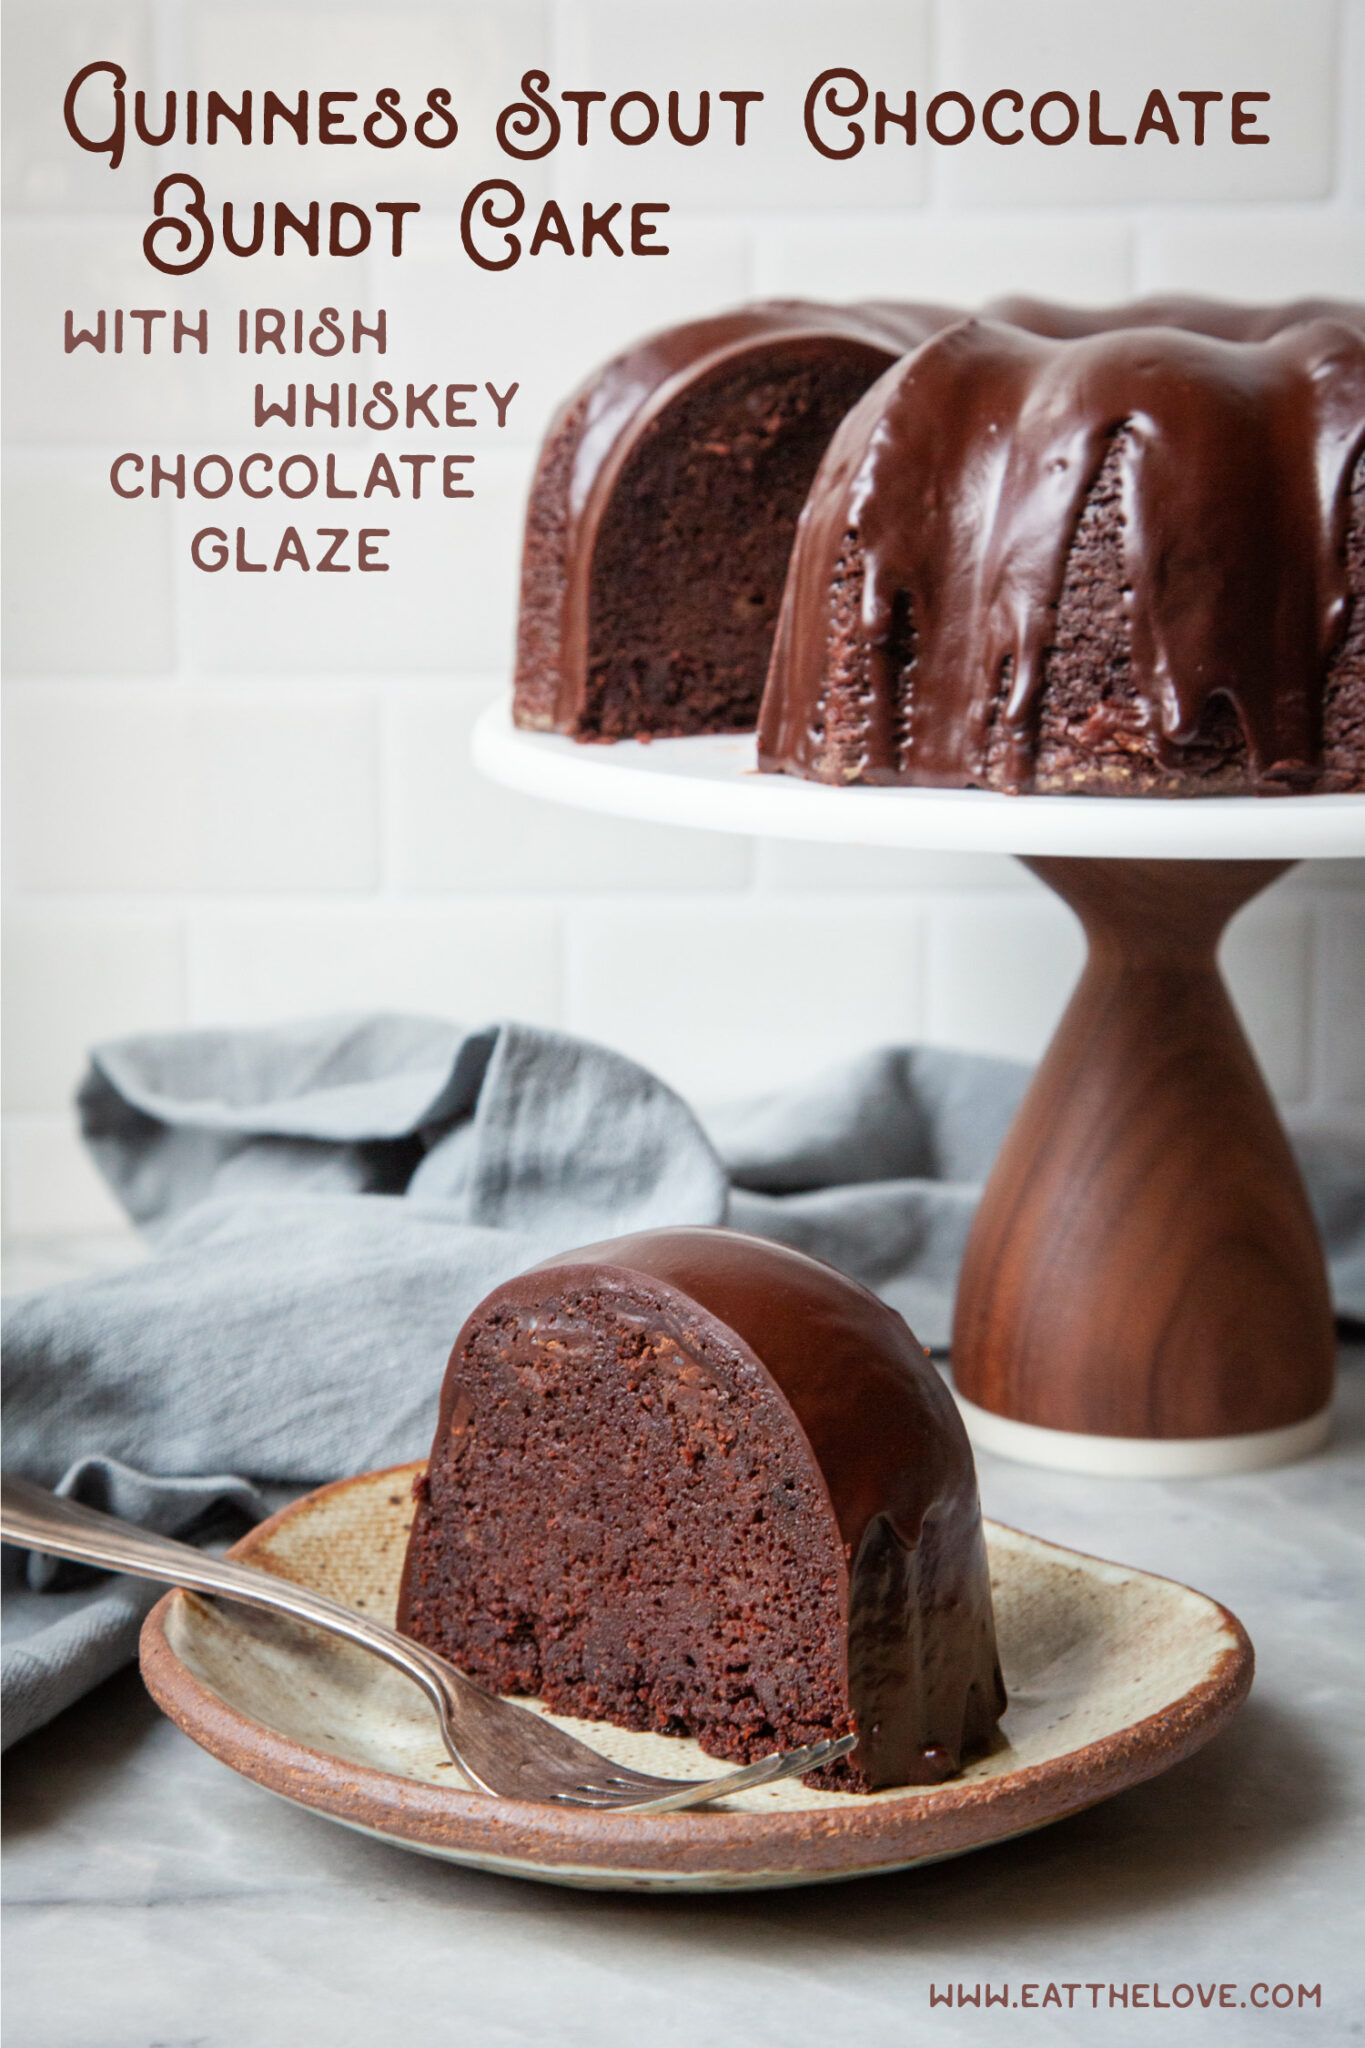 https://www.eatthelove.com/wp-content/uploads/2023/03/Guinness-Chocolate-Bundt-Cake-scaled.jpg